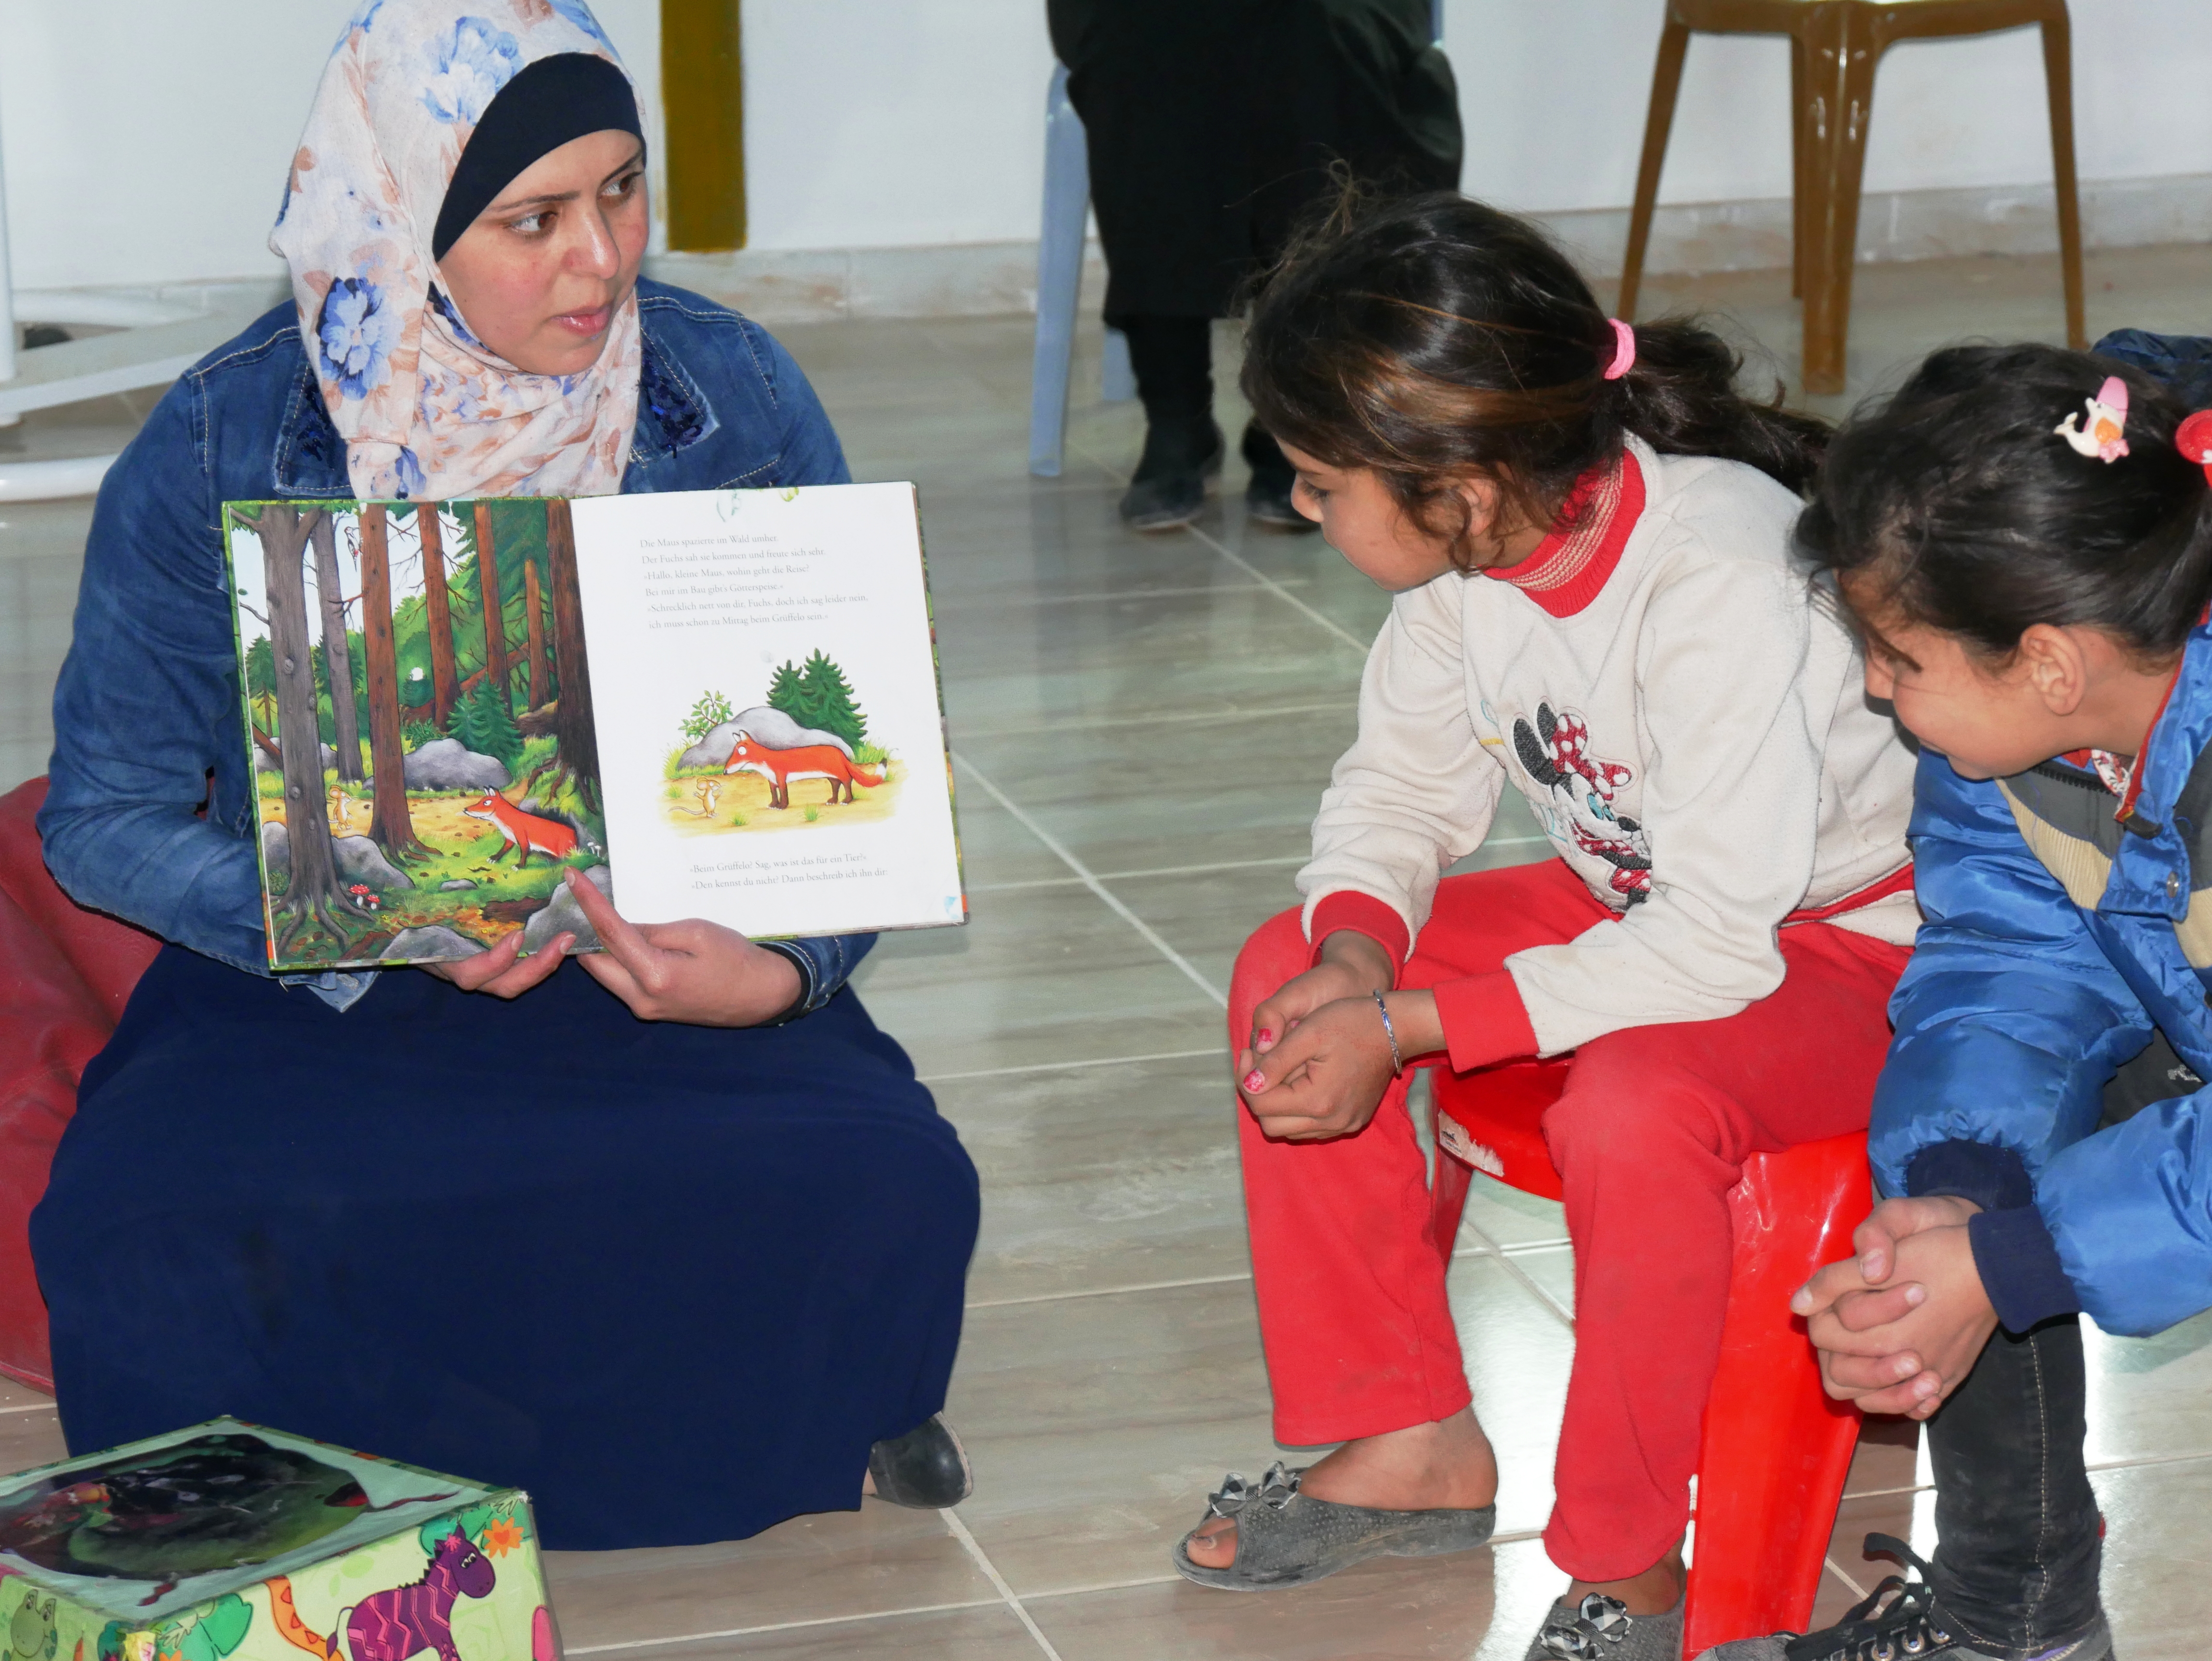 Reading "Tzhe Gruffalo" to a group of refugee children (photo: Dana Ritzmann)